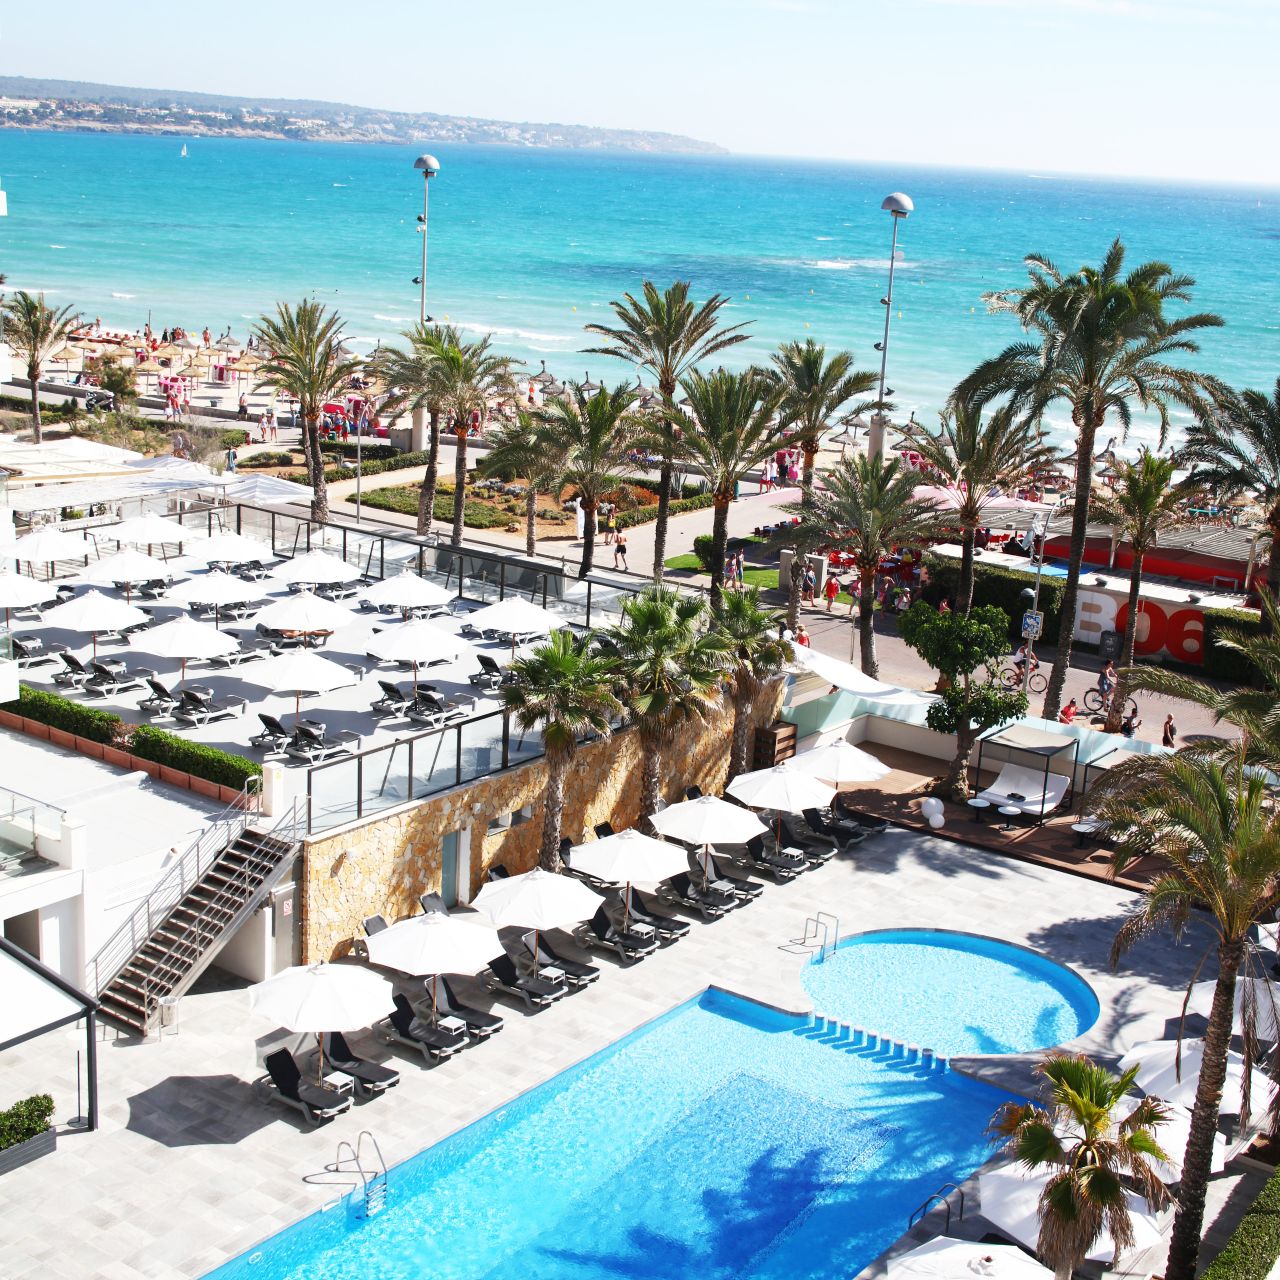 Hotel Playa Golf 4*Sup in Palma - HOTEL DE